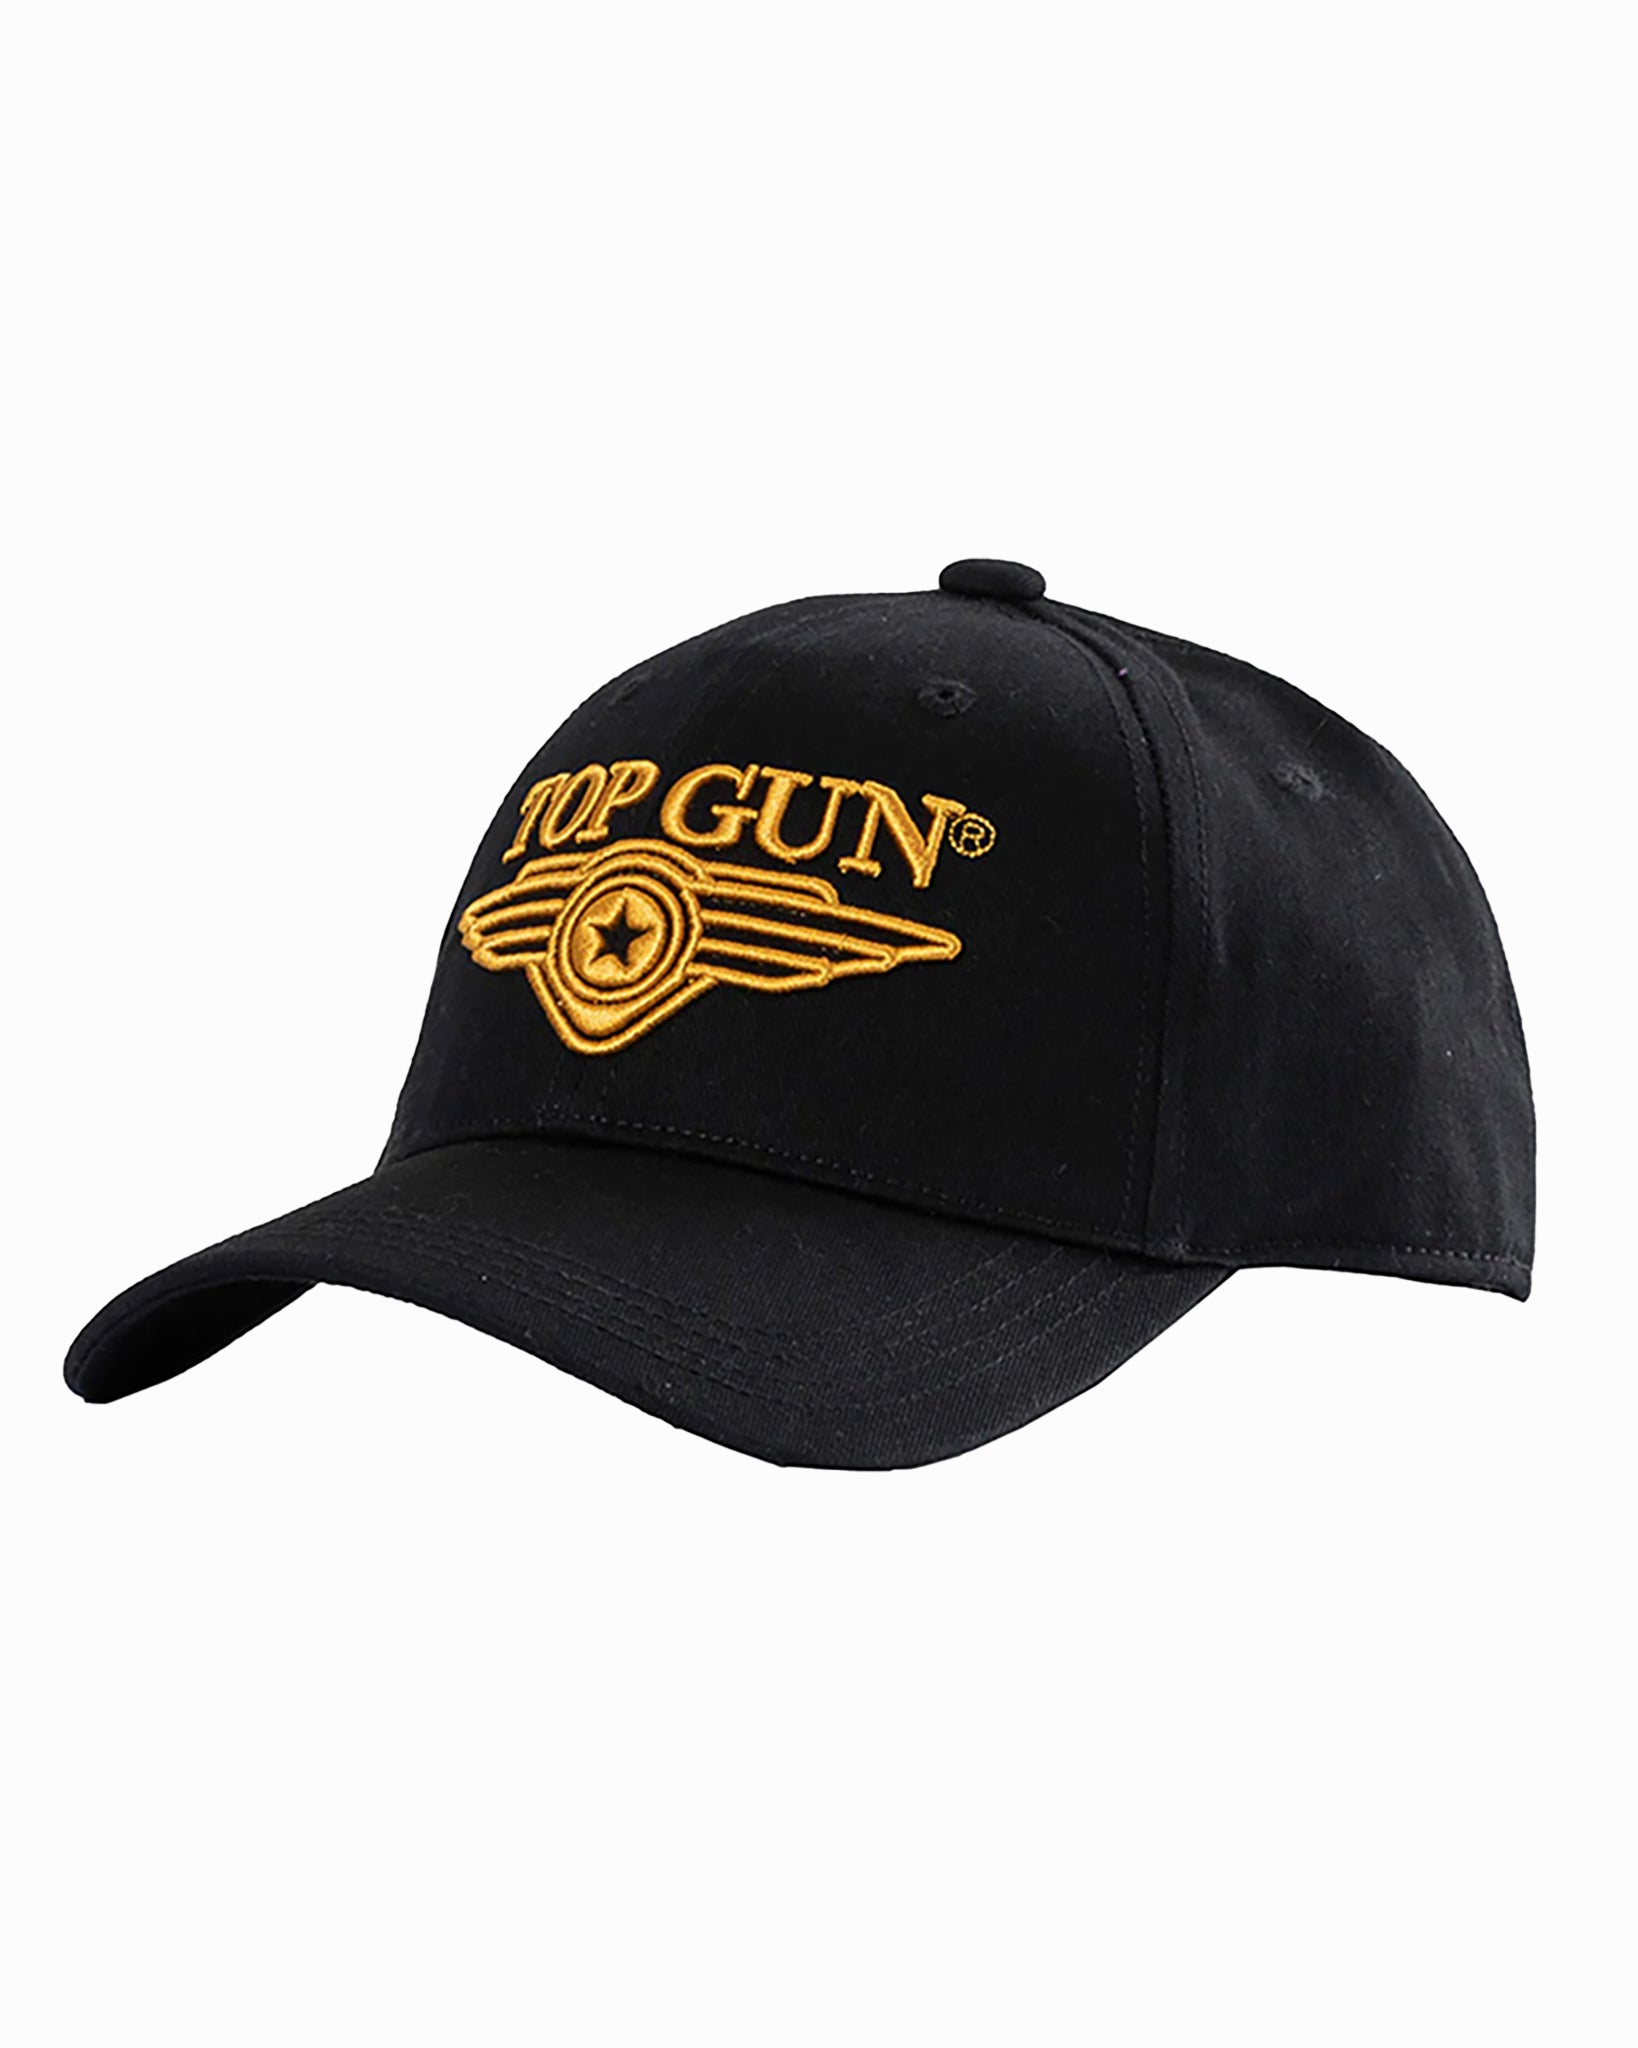 TOP GUN® 3D LOGO CAP – Store Gun Top